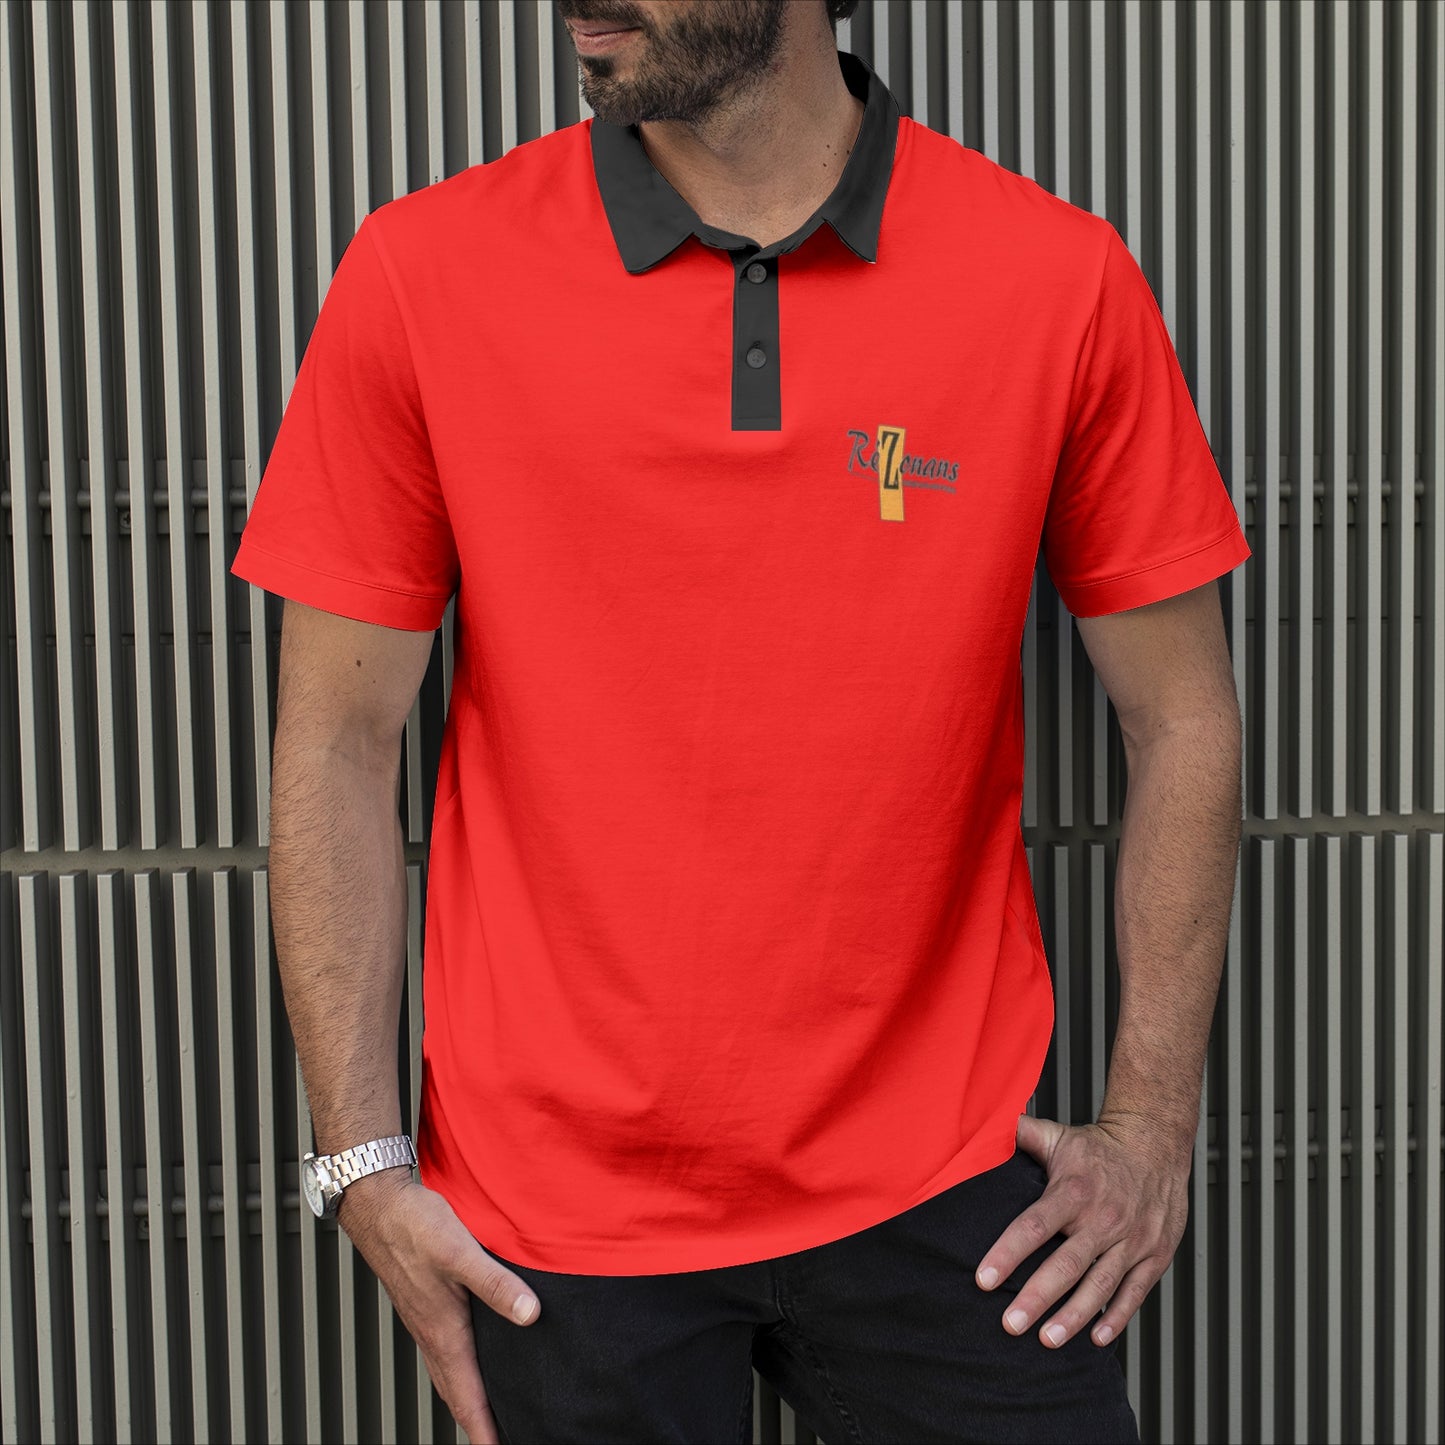 "Redone" collector's polo shirt